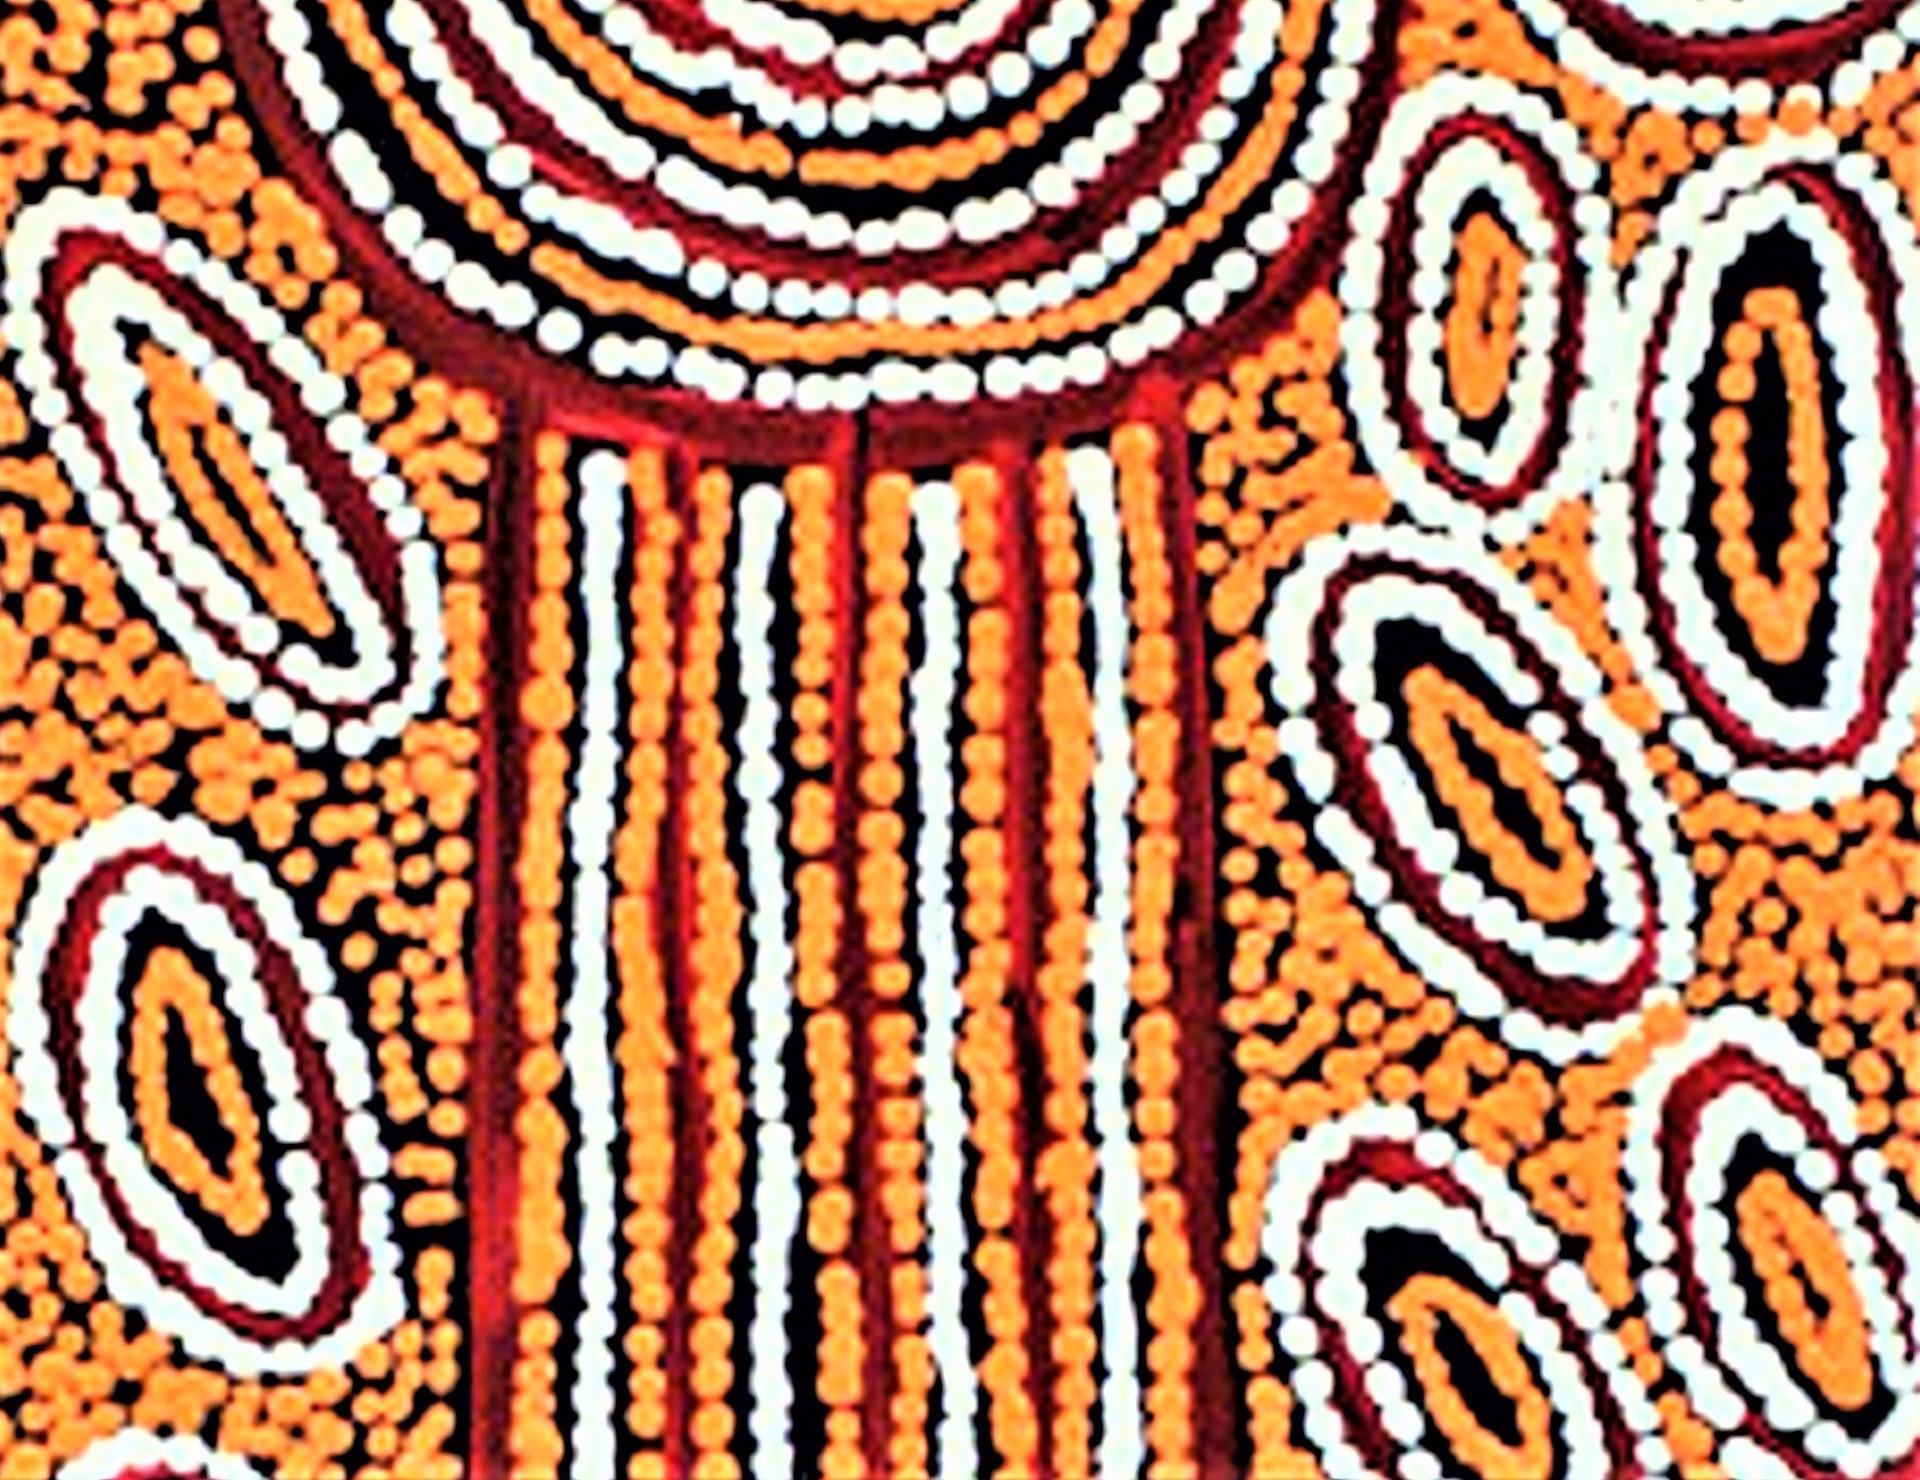 Tjukurla (My Country) - Tali  by Australian Aboriginal Artists